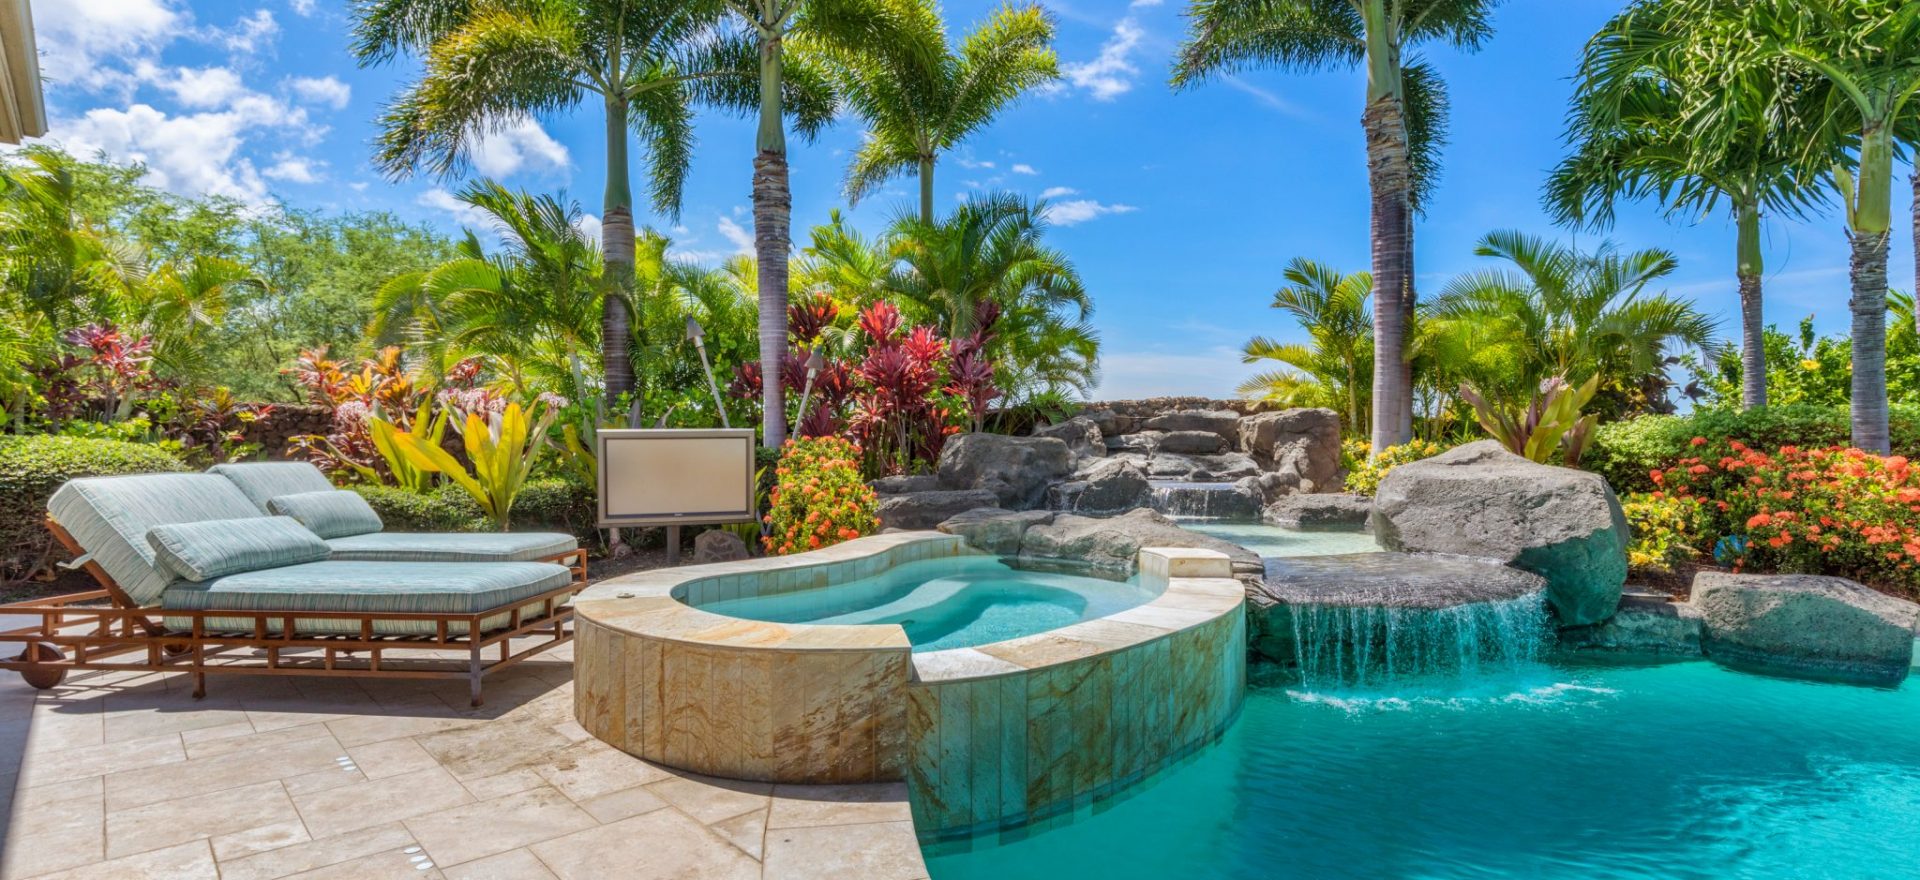 Hualalai Anea Estate 101 - Hot tub, water feature and pool - Hawaii Vacation Home